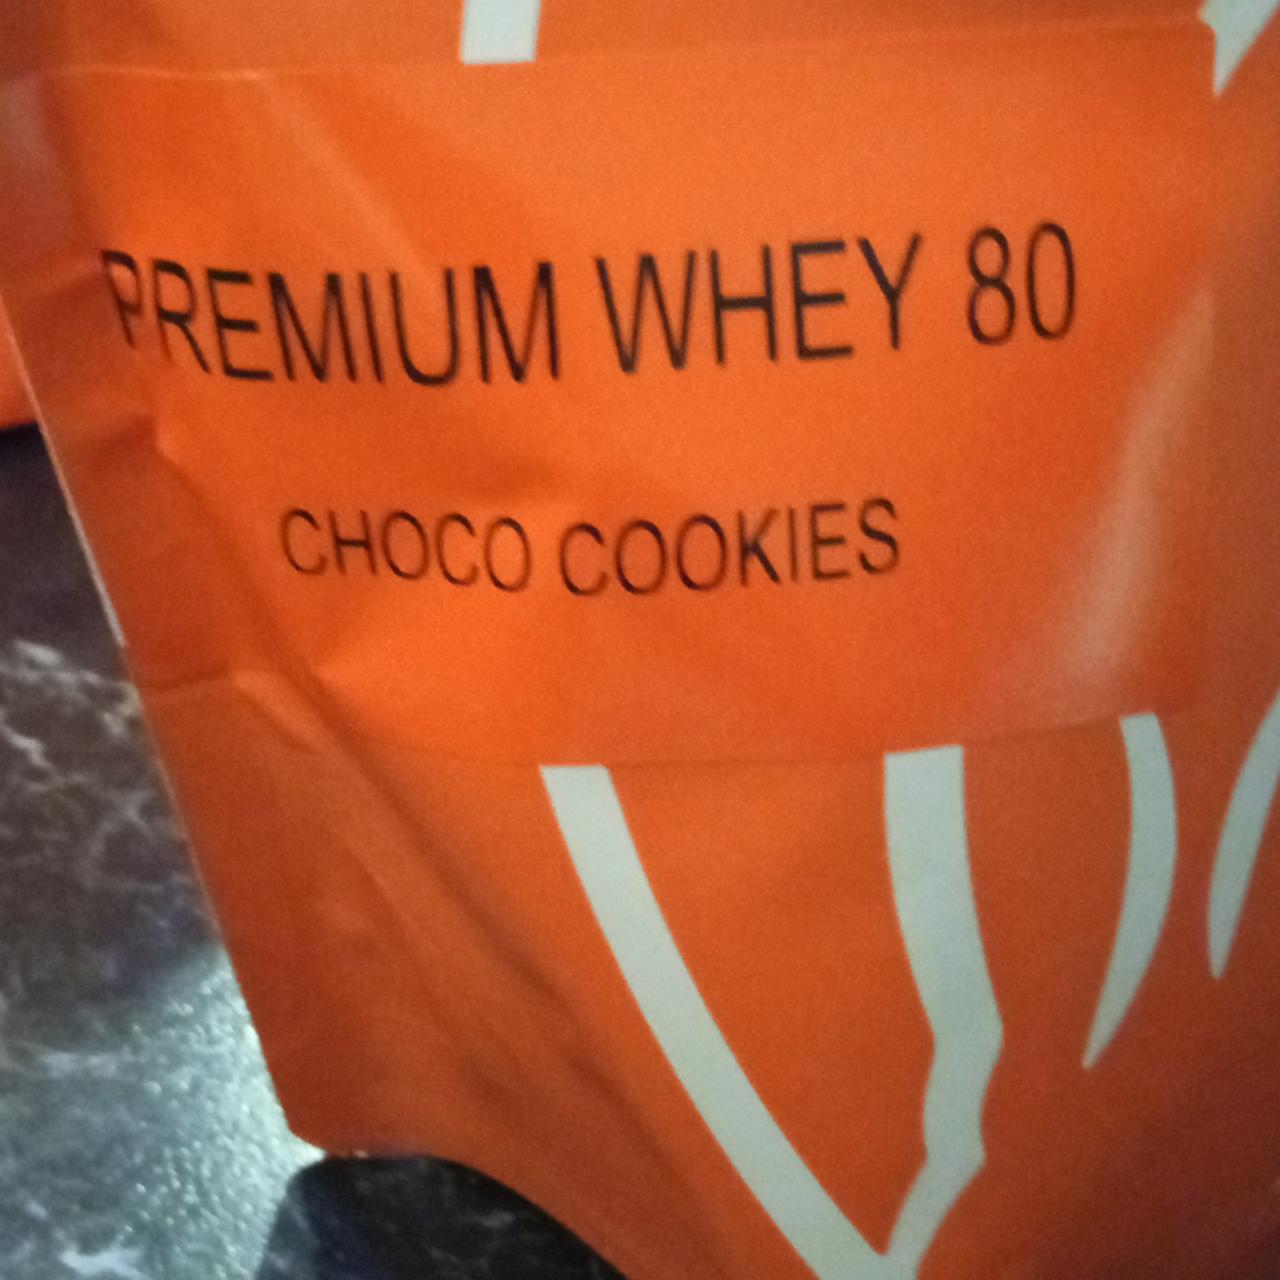 Fotografie - Premium whey 80 choco cookies Still Mass